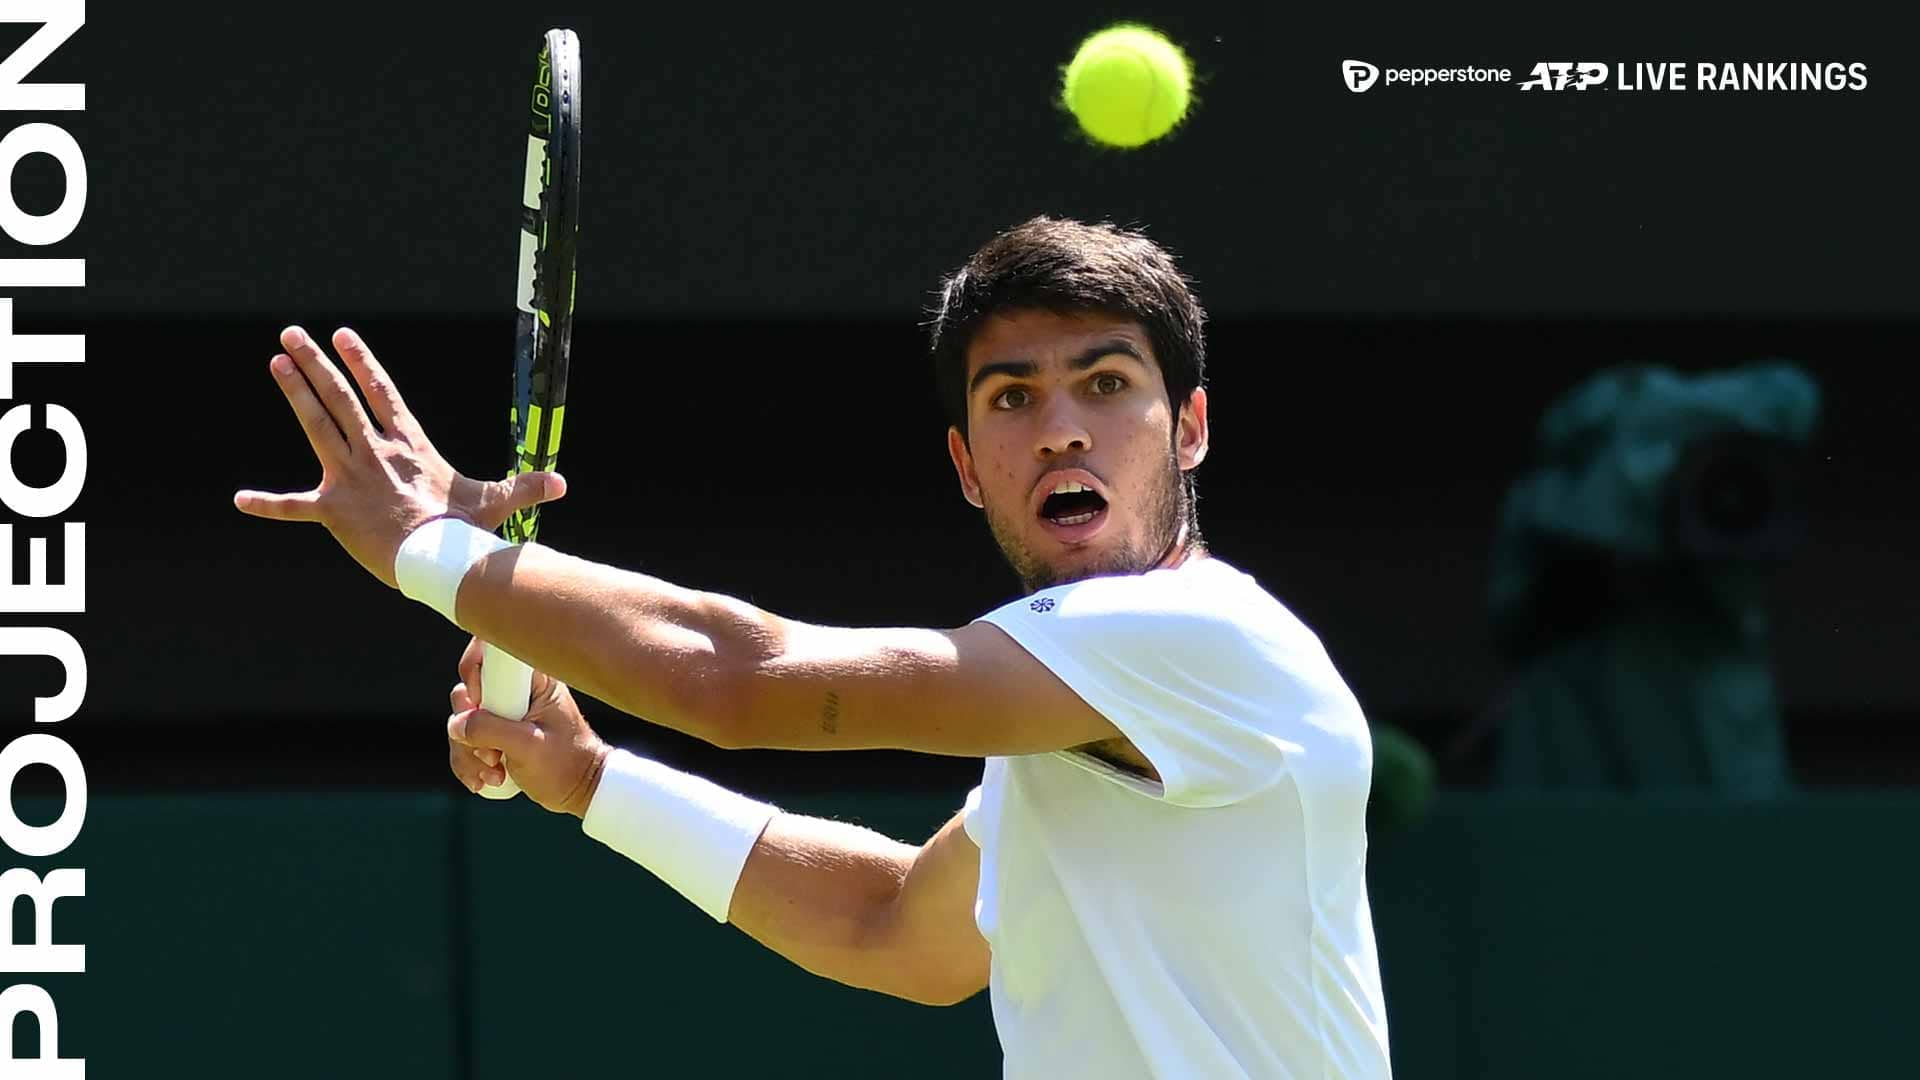 Will Alcaraz Or Djokovic Leave Wimbledon World No